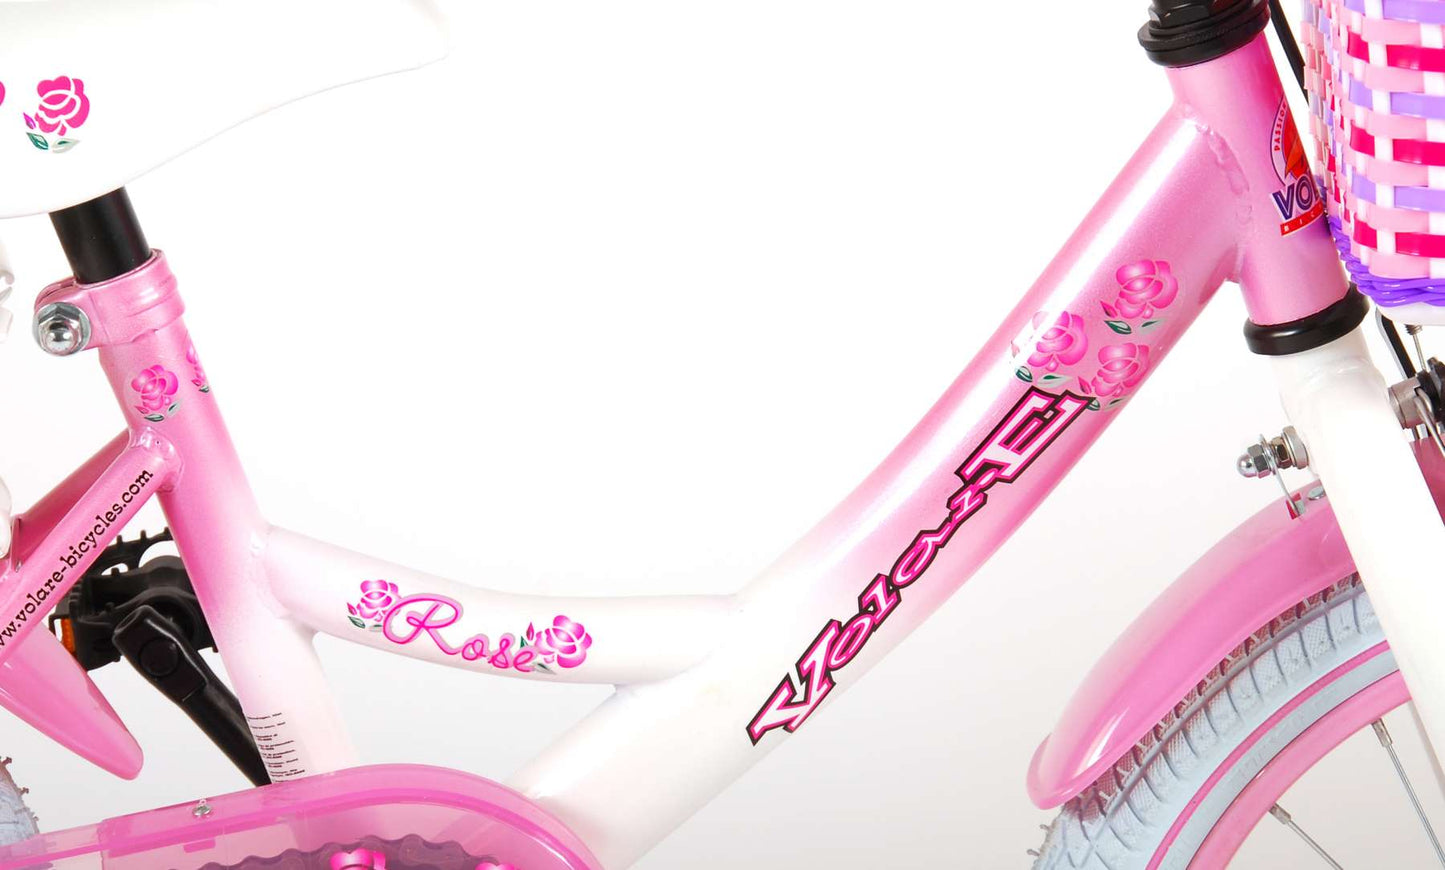 Bicicleta para niños Volare Rose - Niñas - 16 pulgadas - Blanco rosa - 95% ensamblado